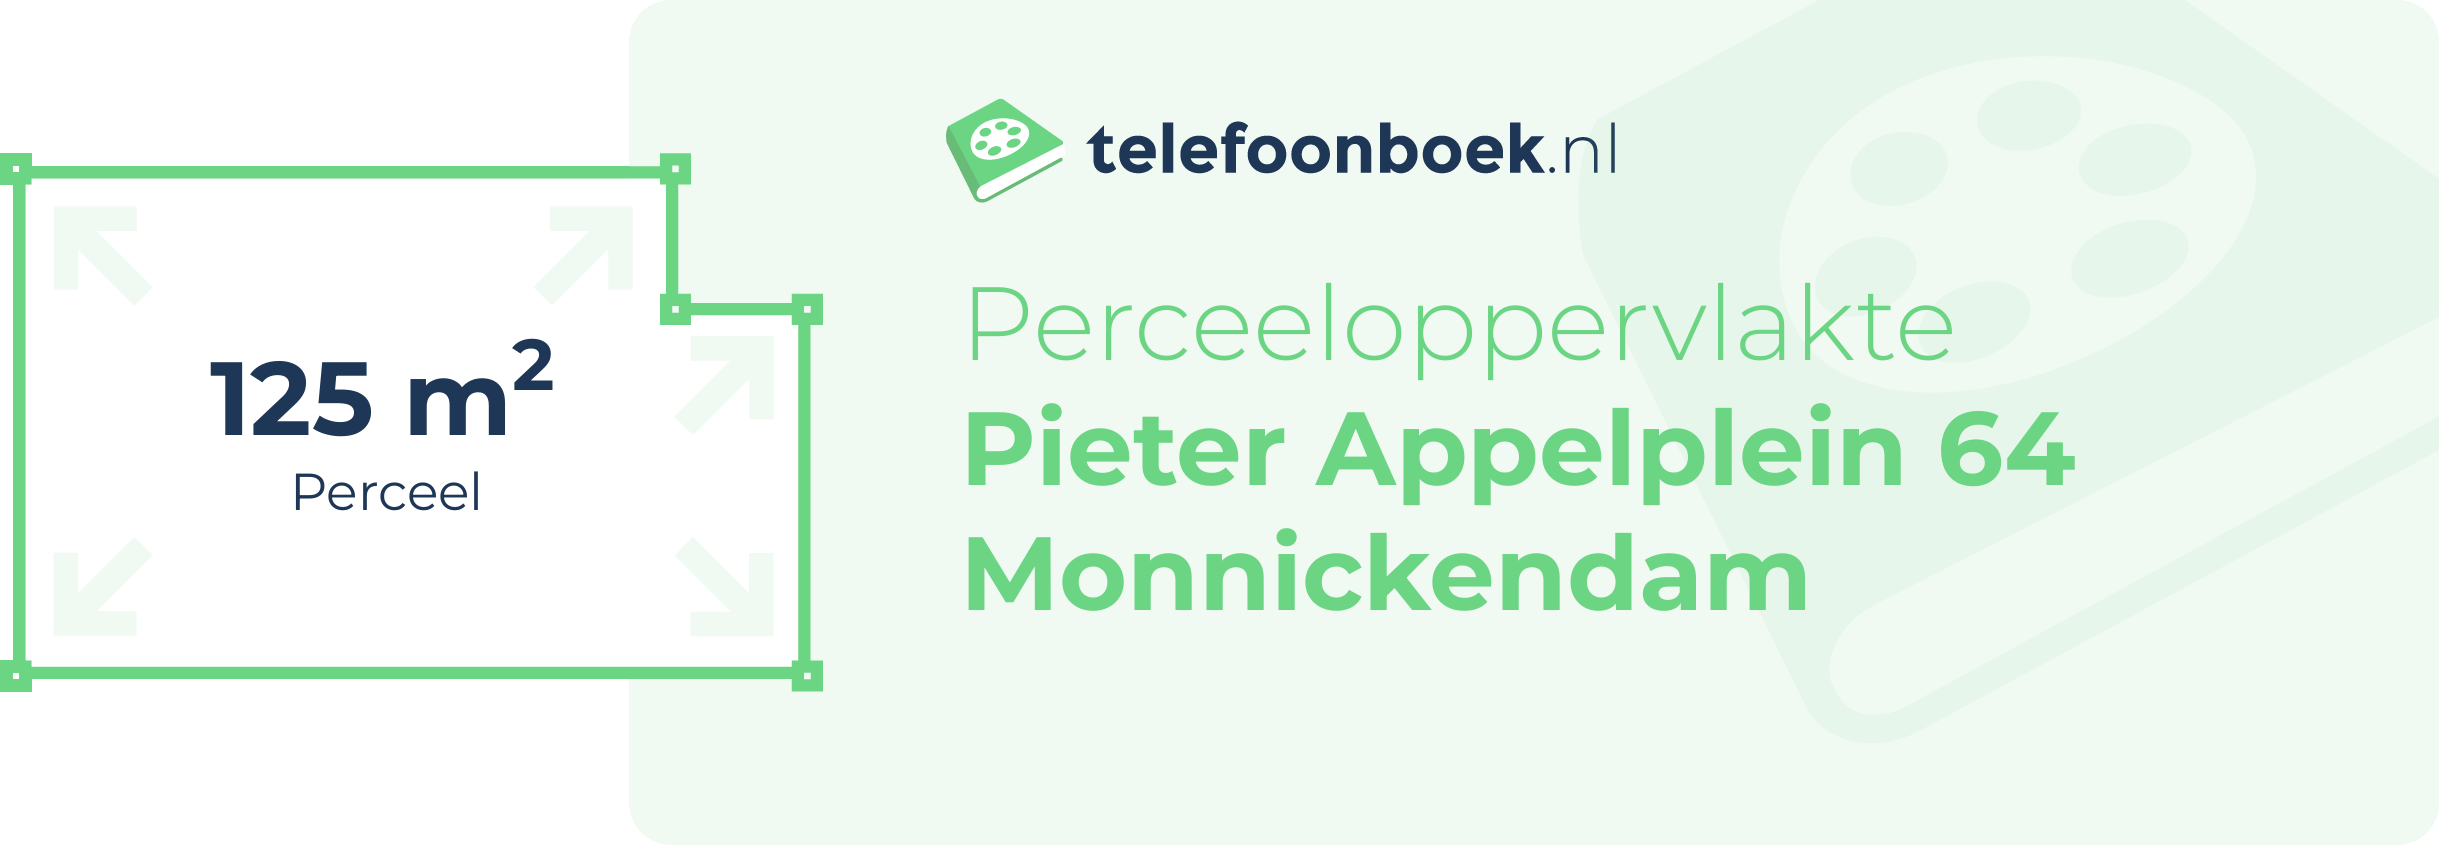 Perceeloppervlakte Pieter Appelplein 64 Monnickendam